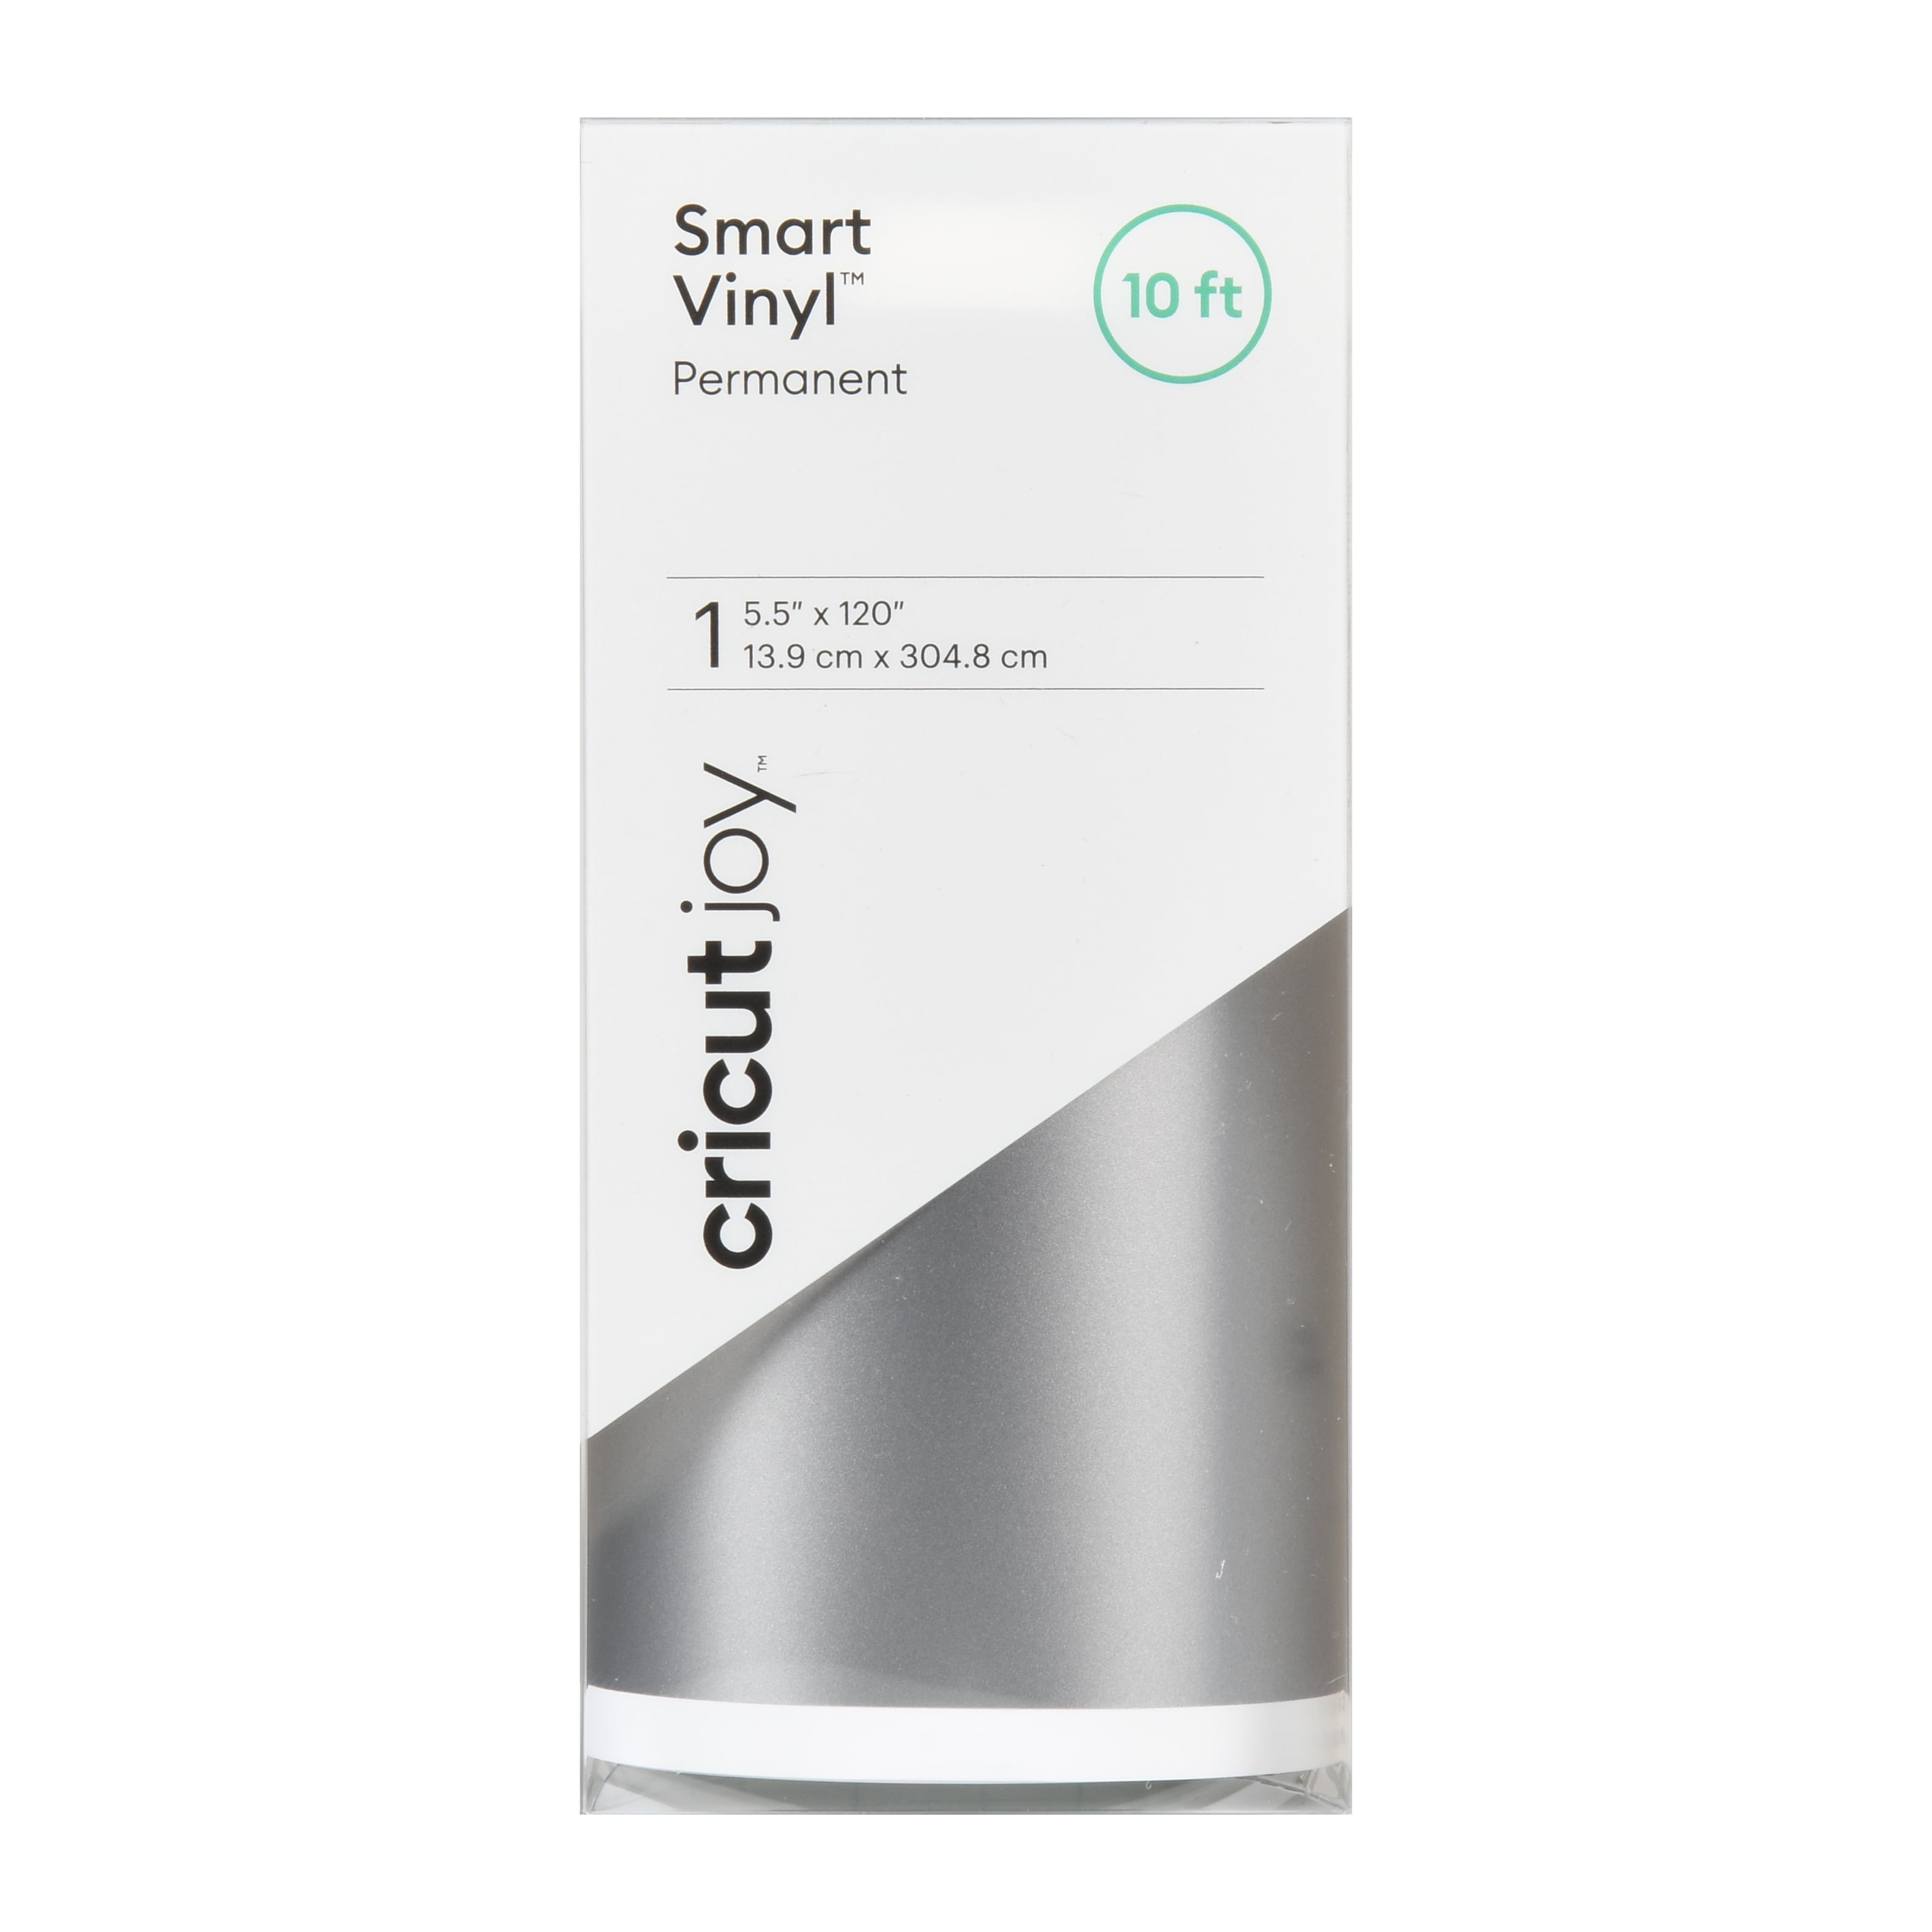 Cricut Joy 10ft Permanent Smart Vinyl White : Target